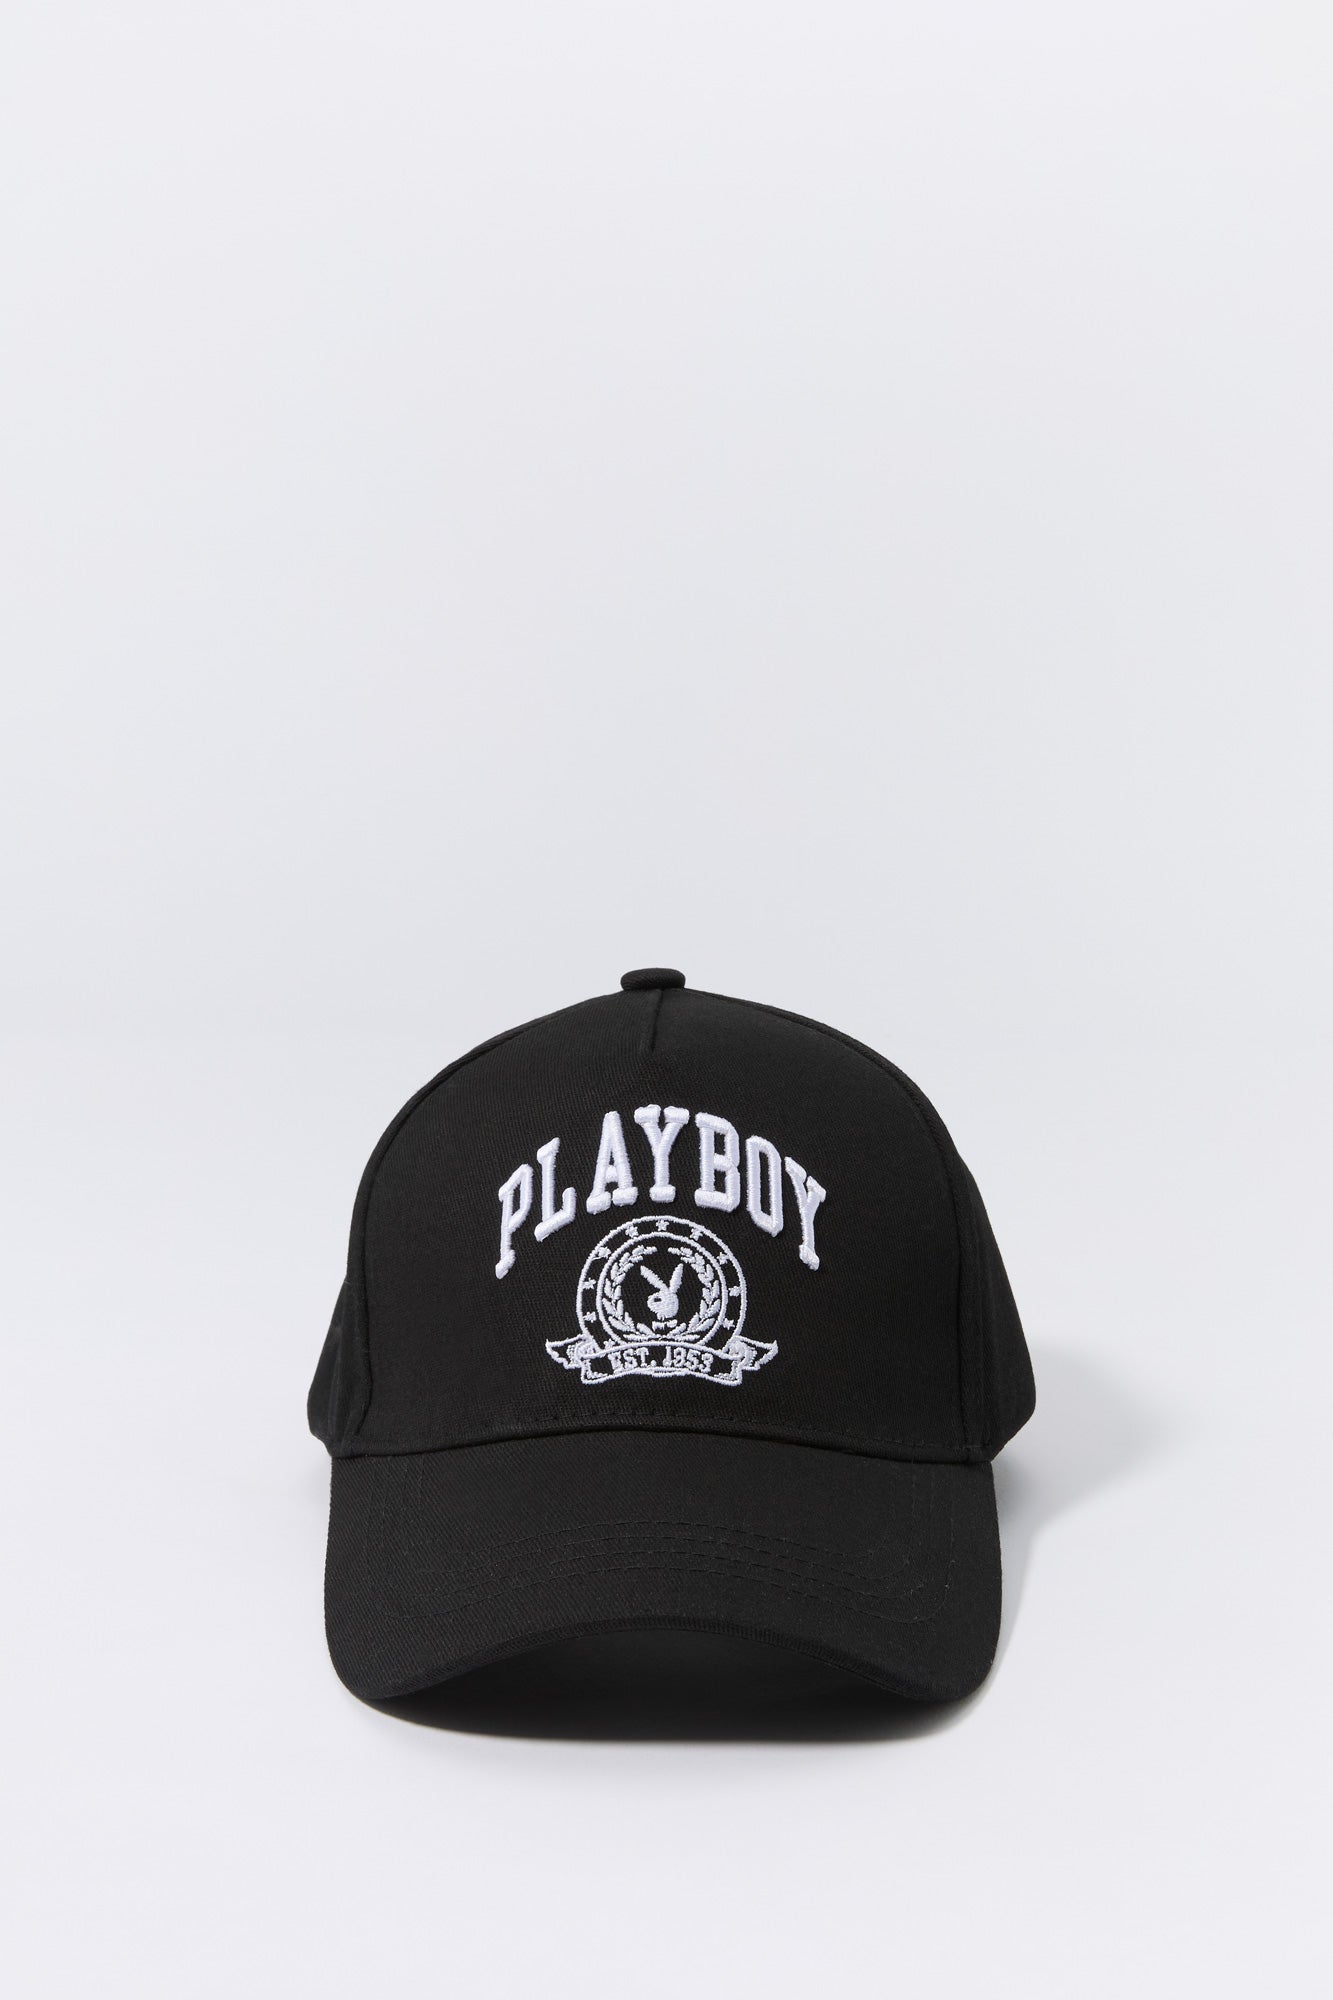 Playboy Est 1953 Embroidered Baseball Hat